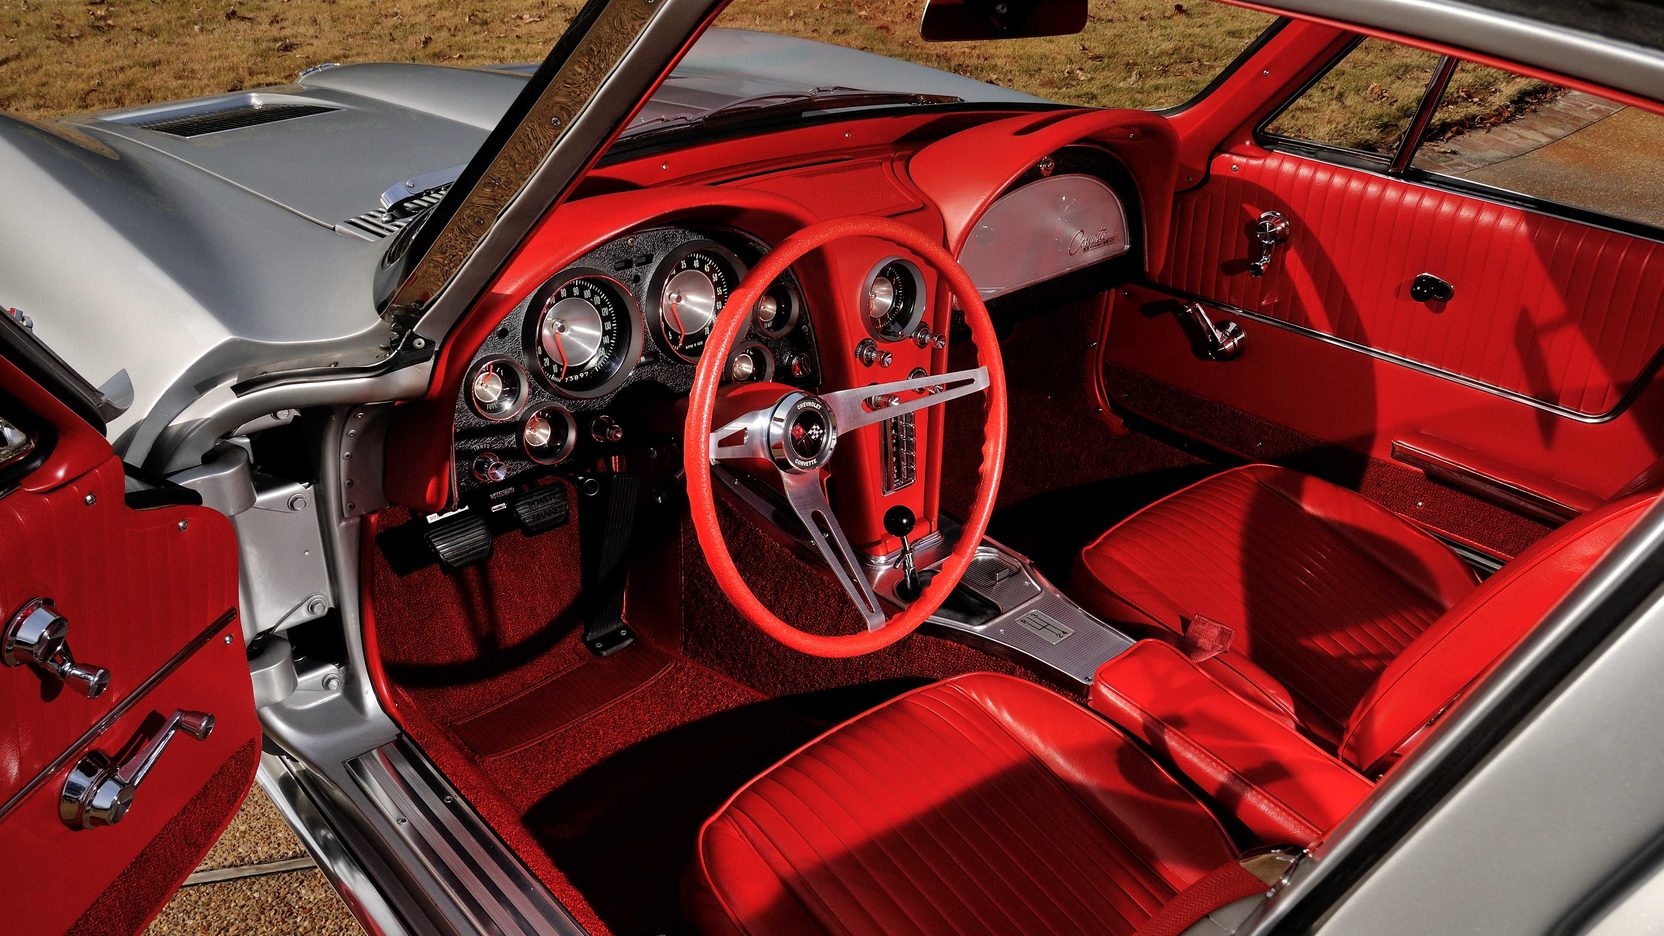 Corvette Steering & Dash